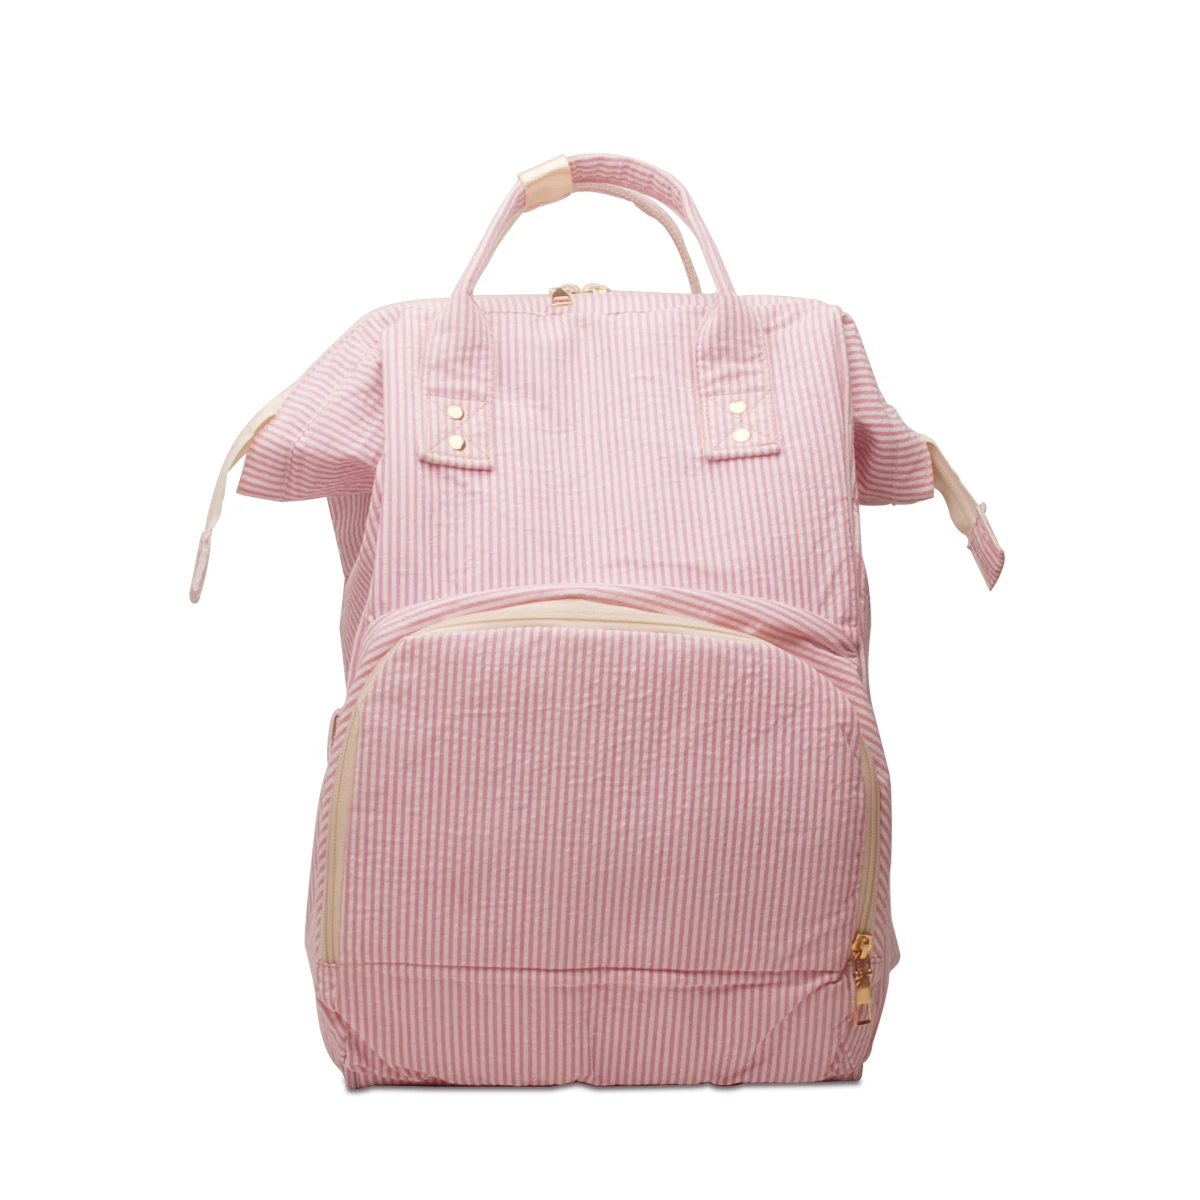 

Domil Monogram Seersucker Diaper Bag Backpack Multifunction Travel Back Pack Maternity Baby Changing Bags Dom112-1276